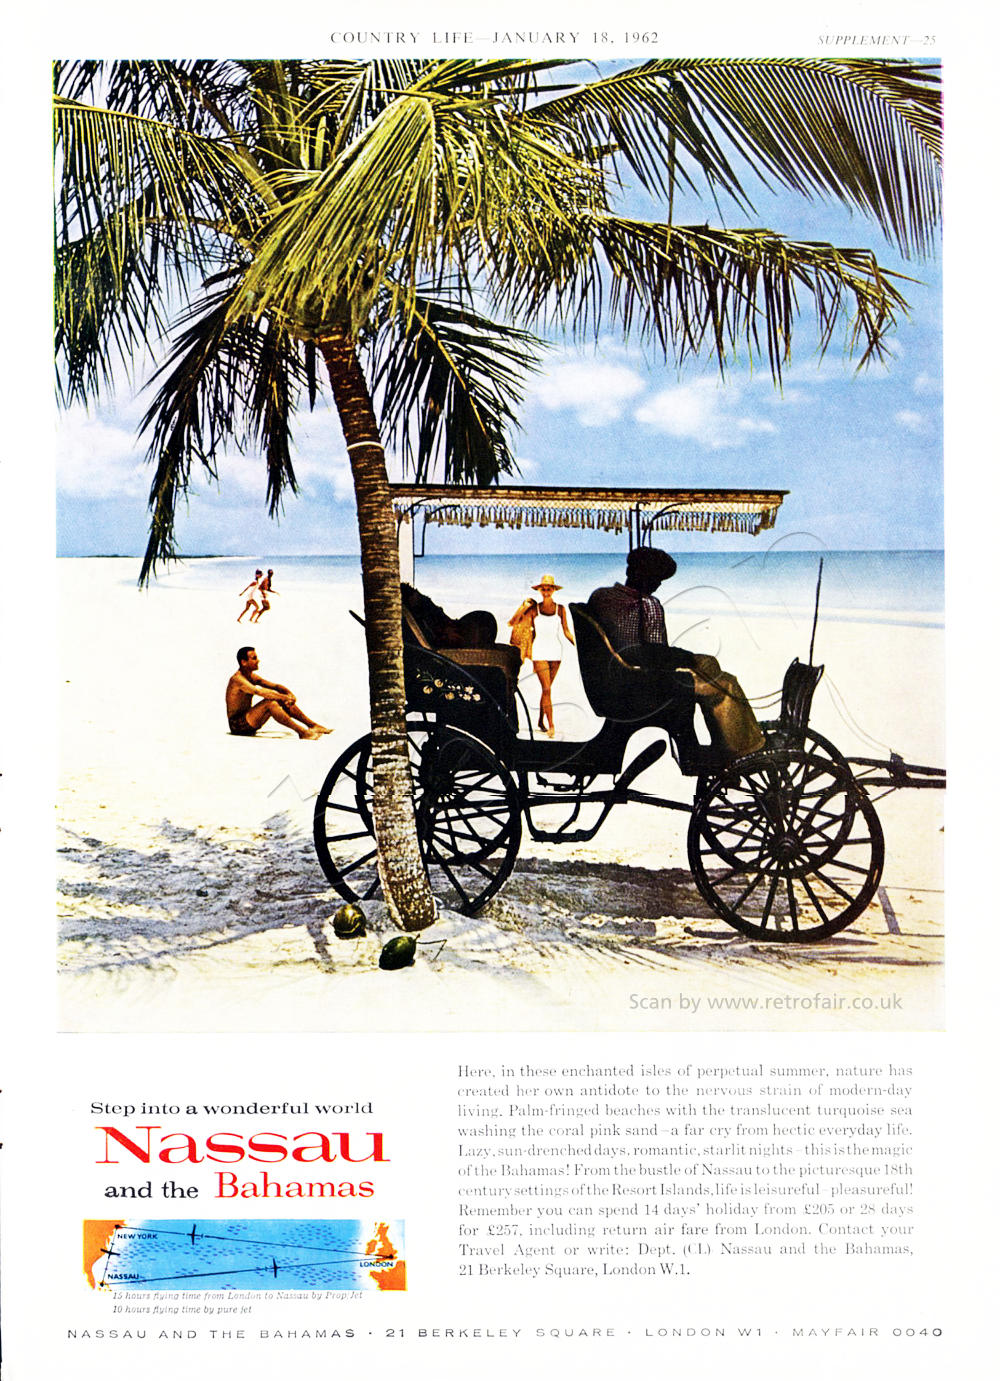 1962 Nassau and the Bahamas advert